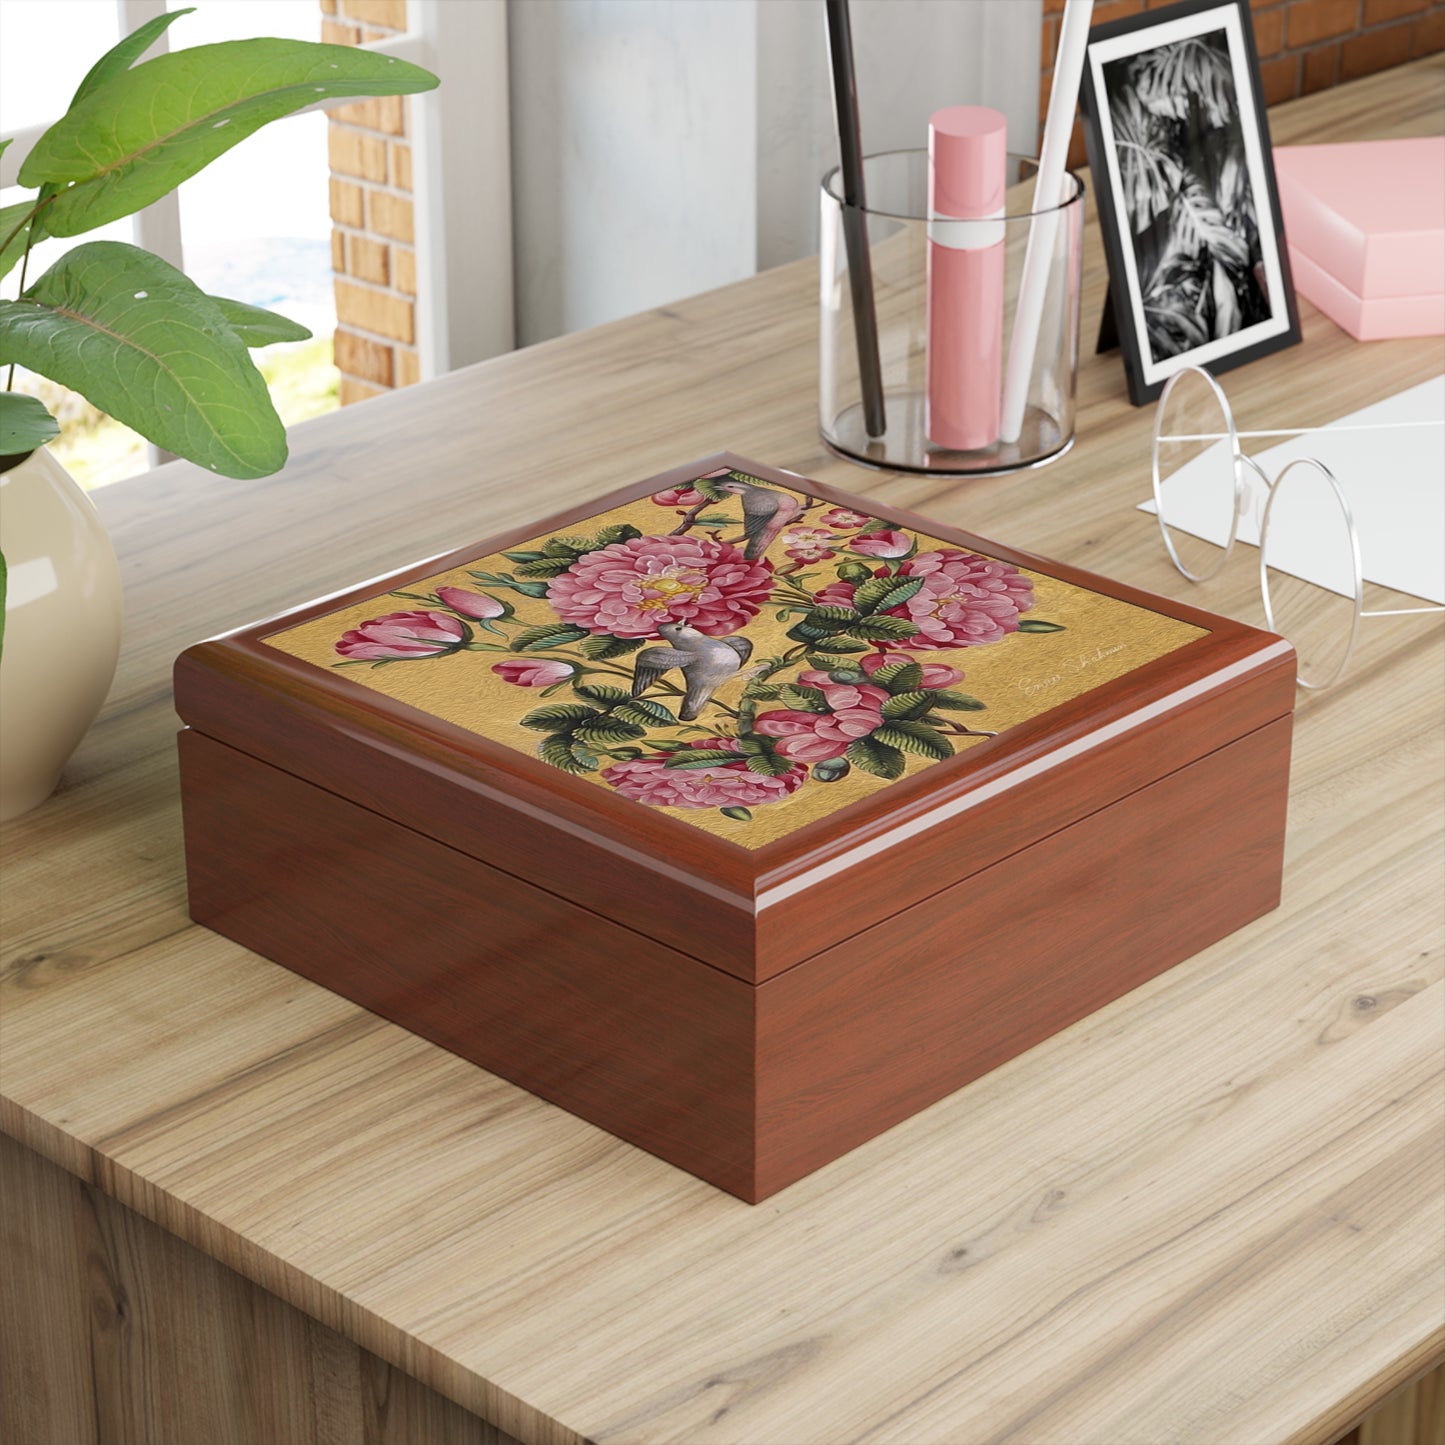 Lacquered Jewelry Keepsake Box - Floral Design golden oak